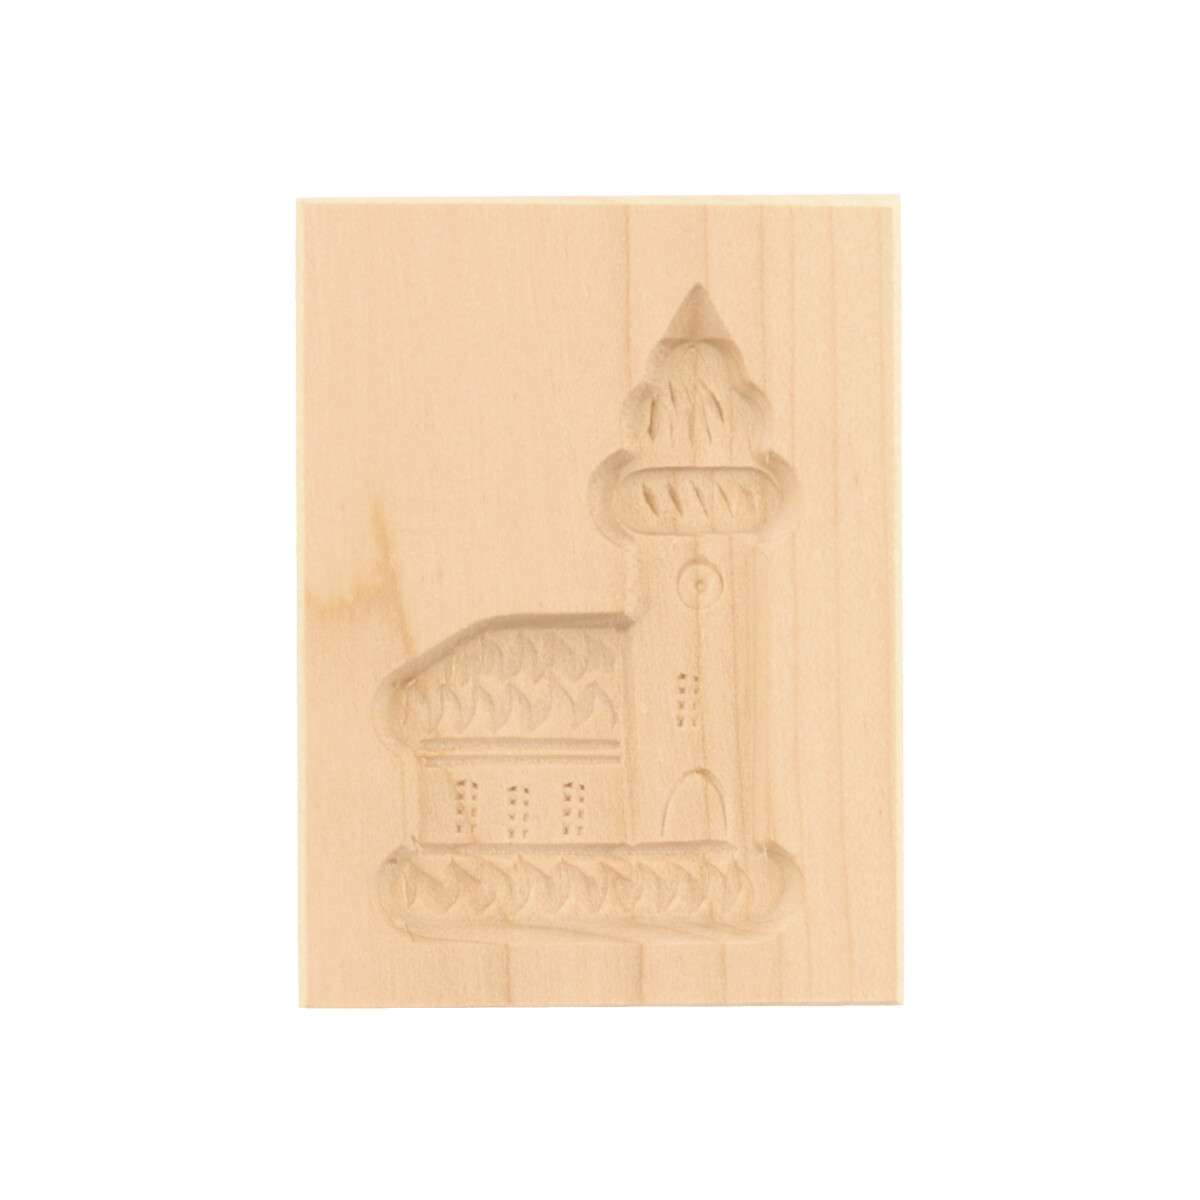 Spekulatiusform, 1 Bild, Kirche aus Holz 8 cm